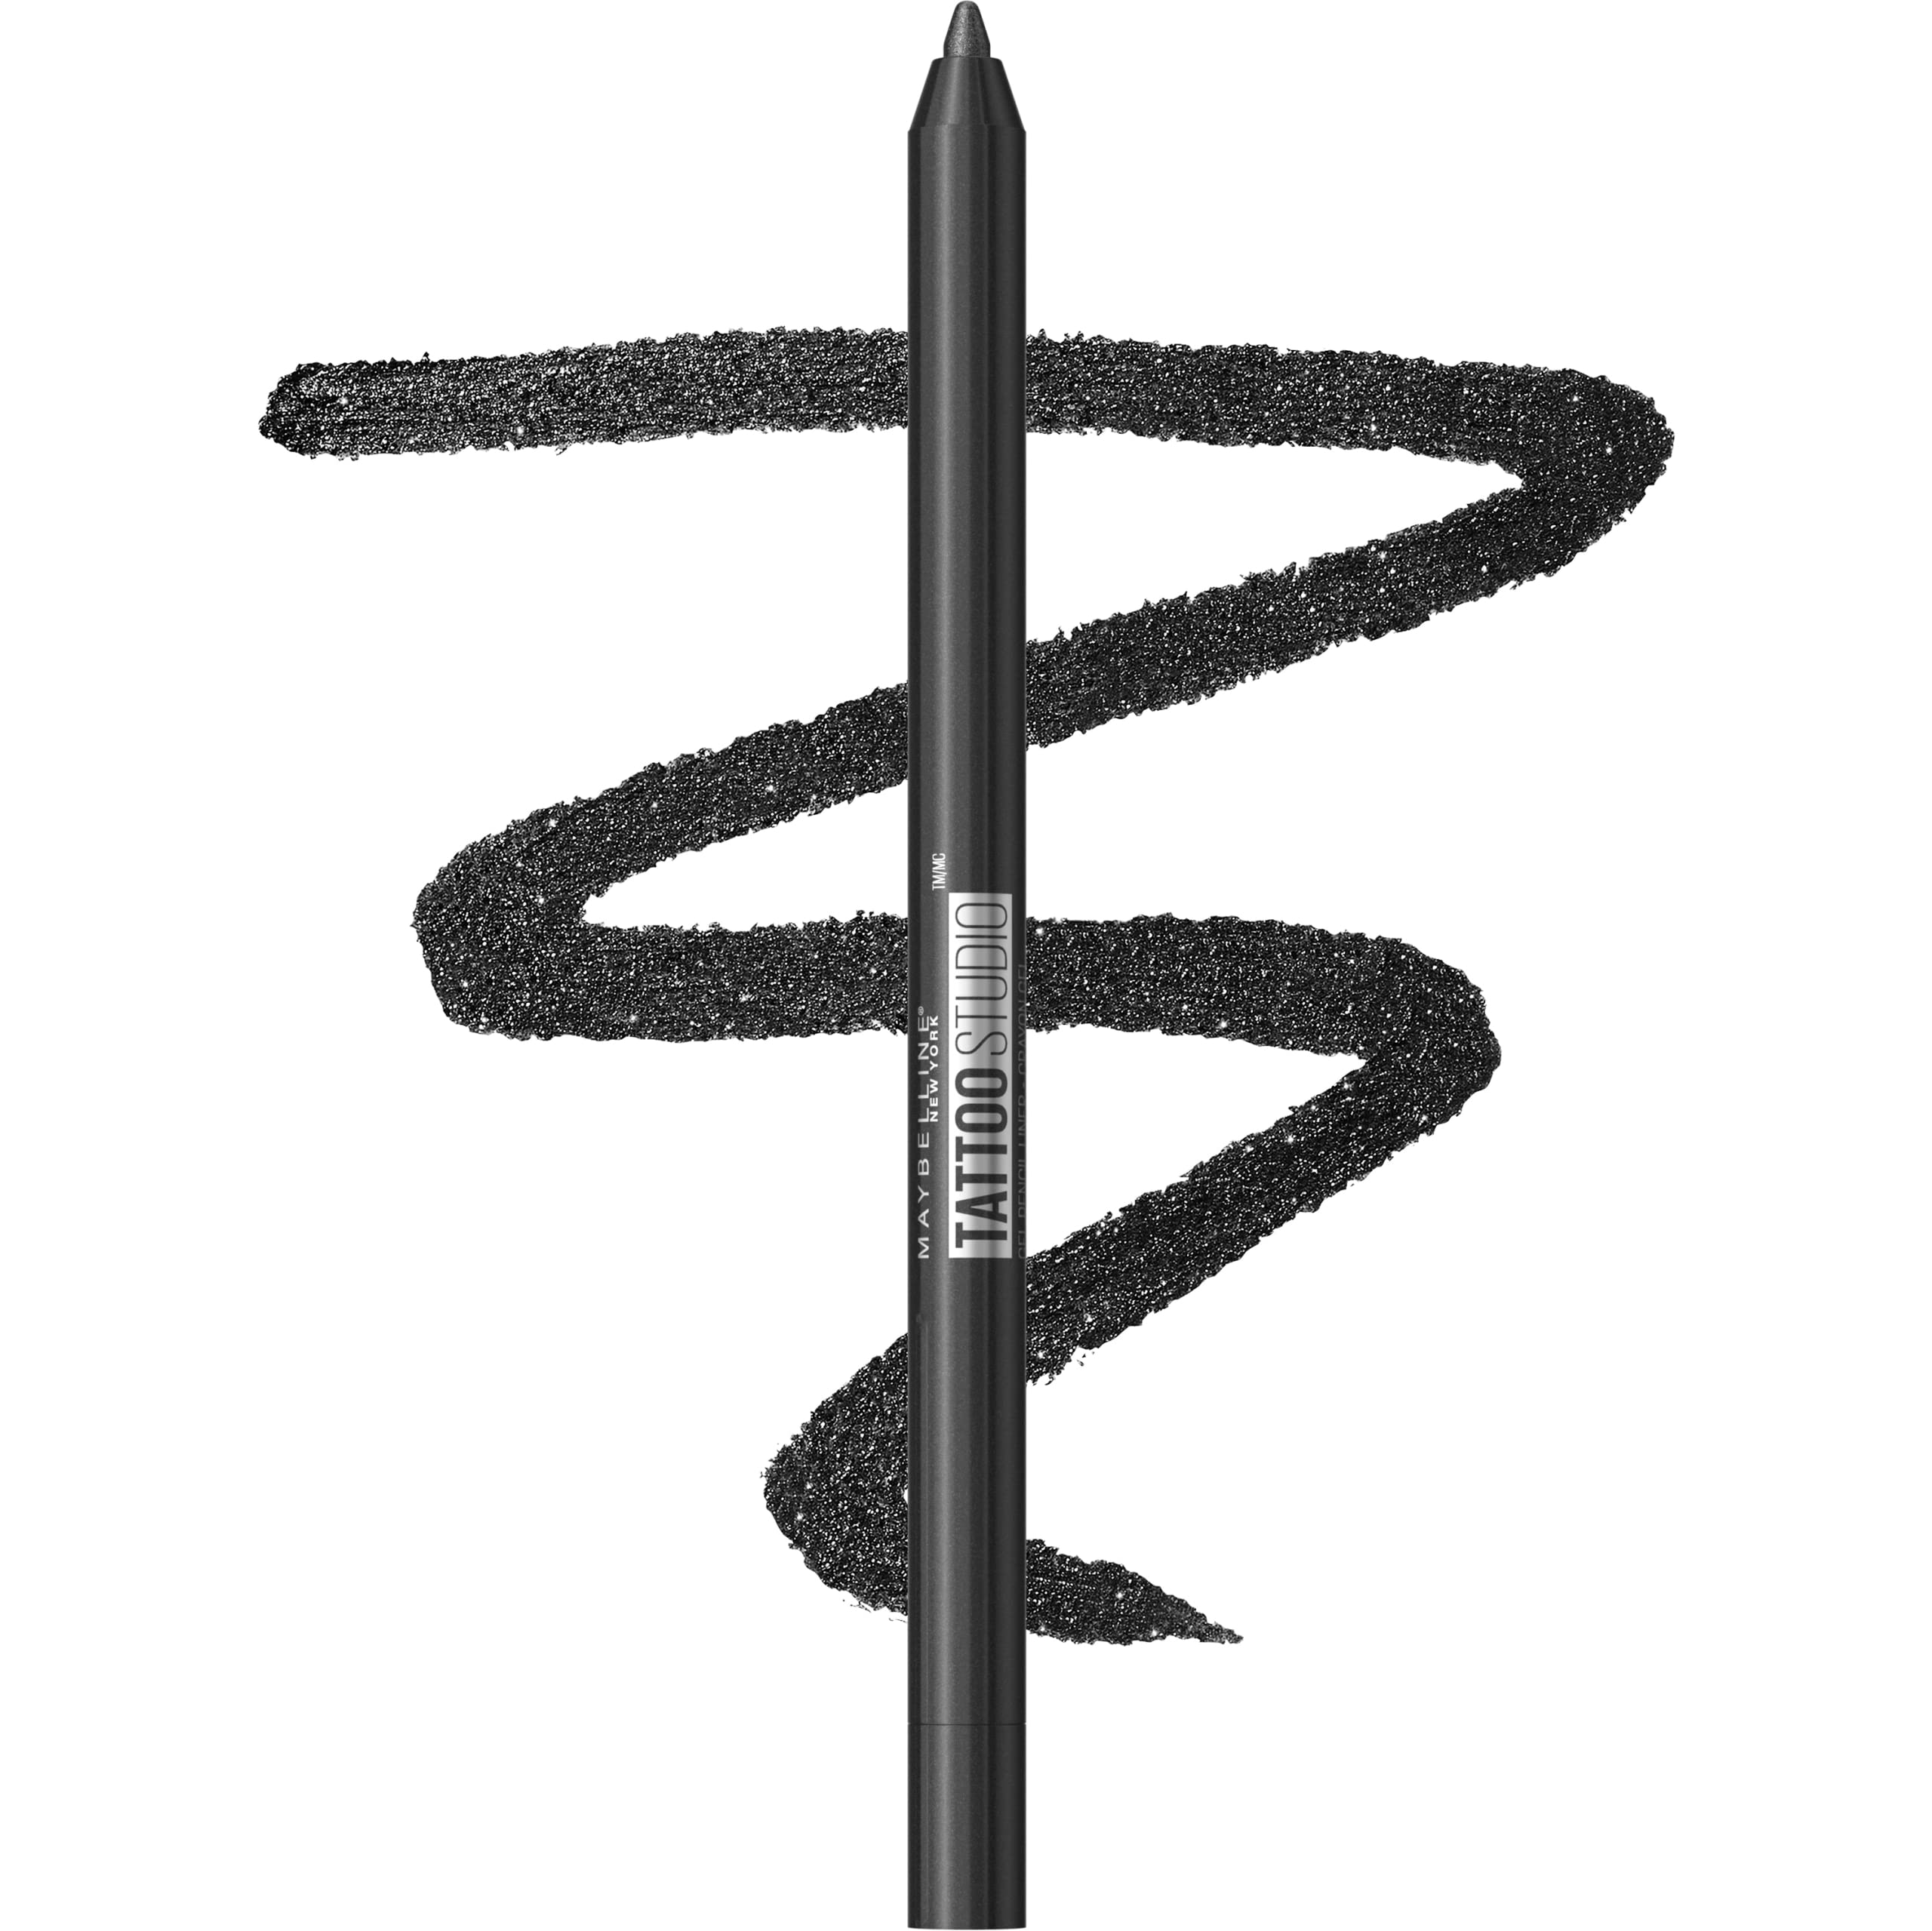 Maybelline New York Tattoo Studio Long-Lasting Sharpenable Eyeliner Pencil  Glide on Smooth Gel Pigments with 36 Hour Wear Waterproof Metallic Nights  0.04 oz